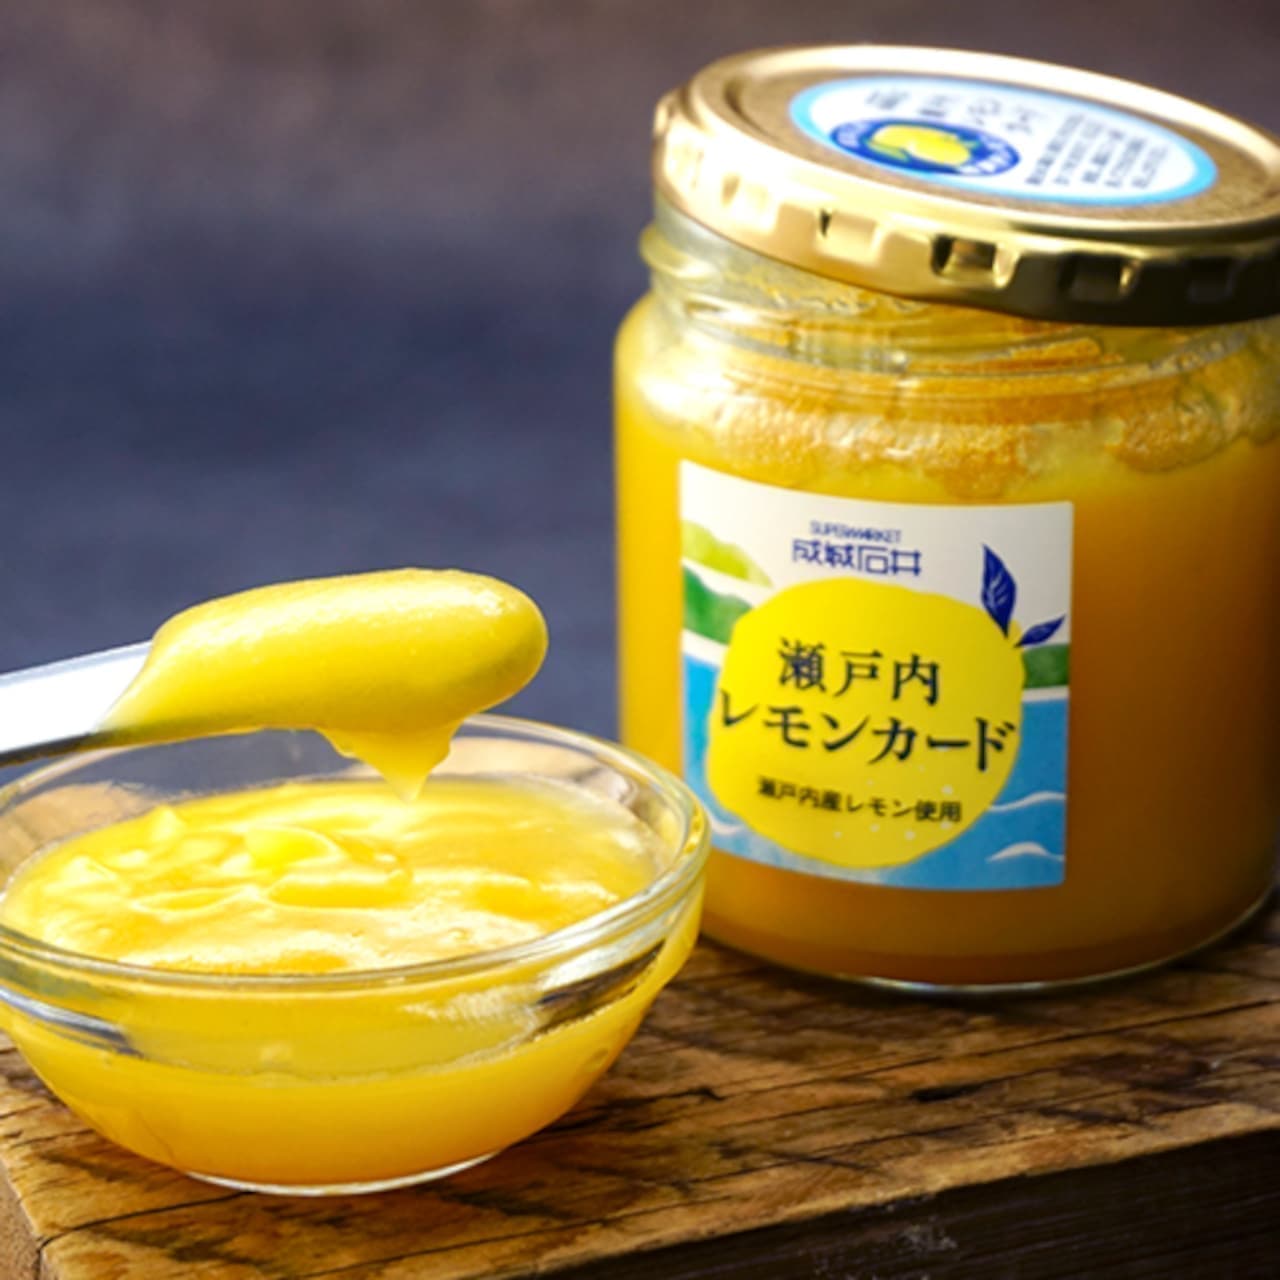 Seijo Ishii "Seijo Ishii Recommended Lemon Bag